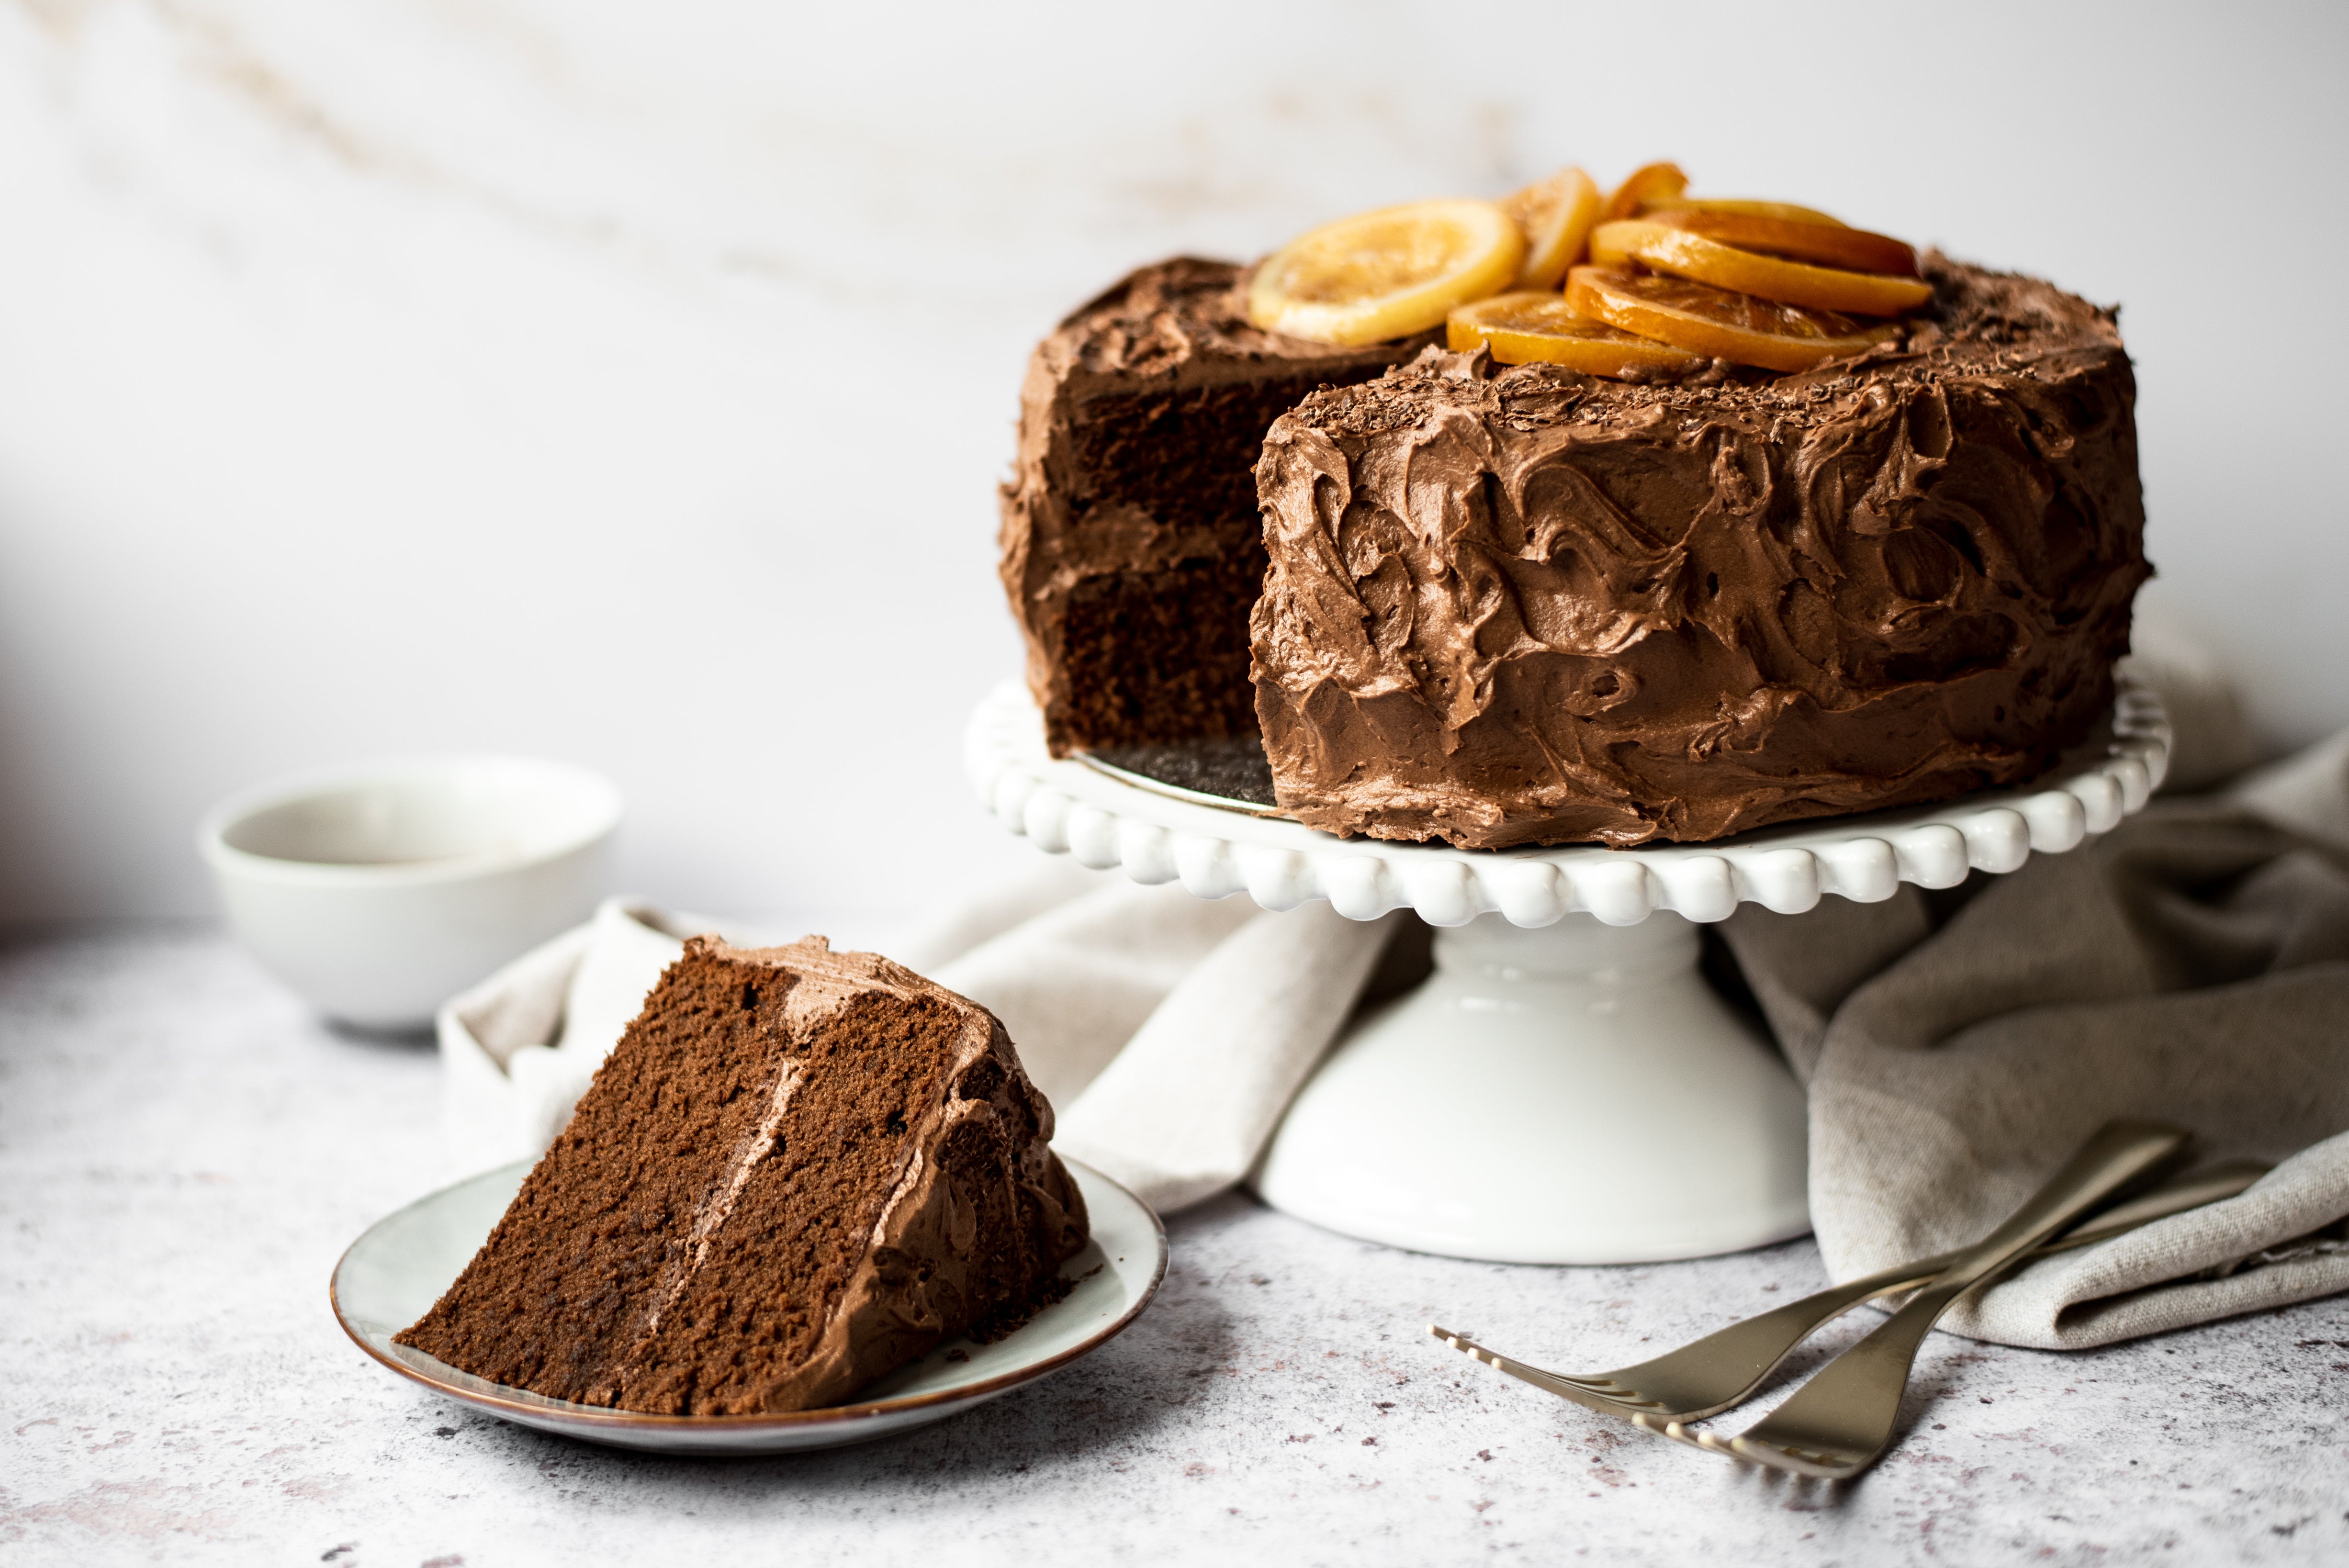 Easy Chocolate Truffle Cake Recipe | The Table by Harry & David